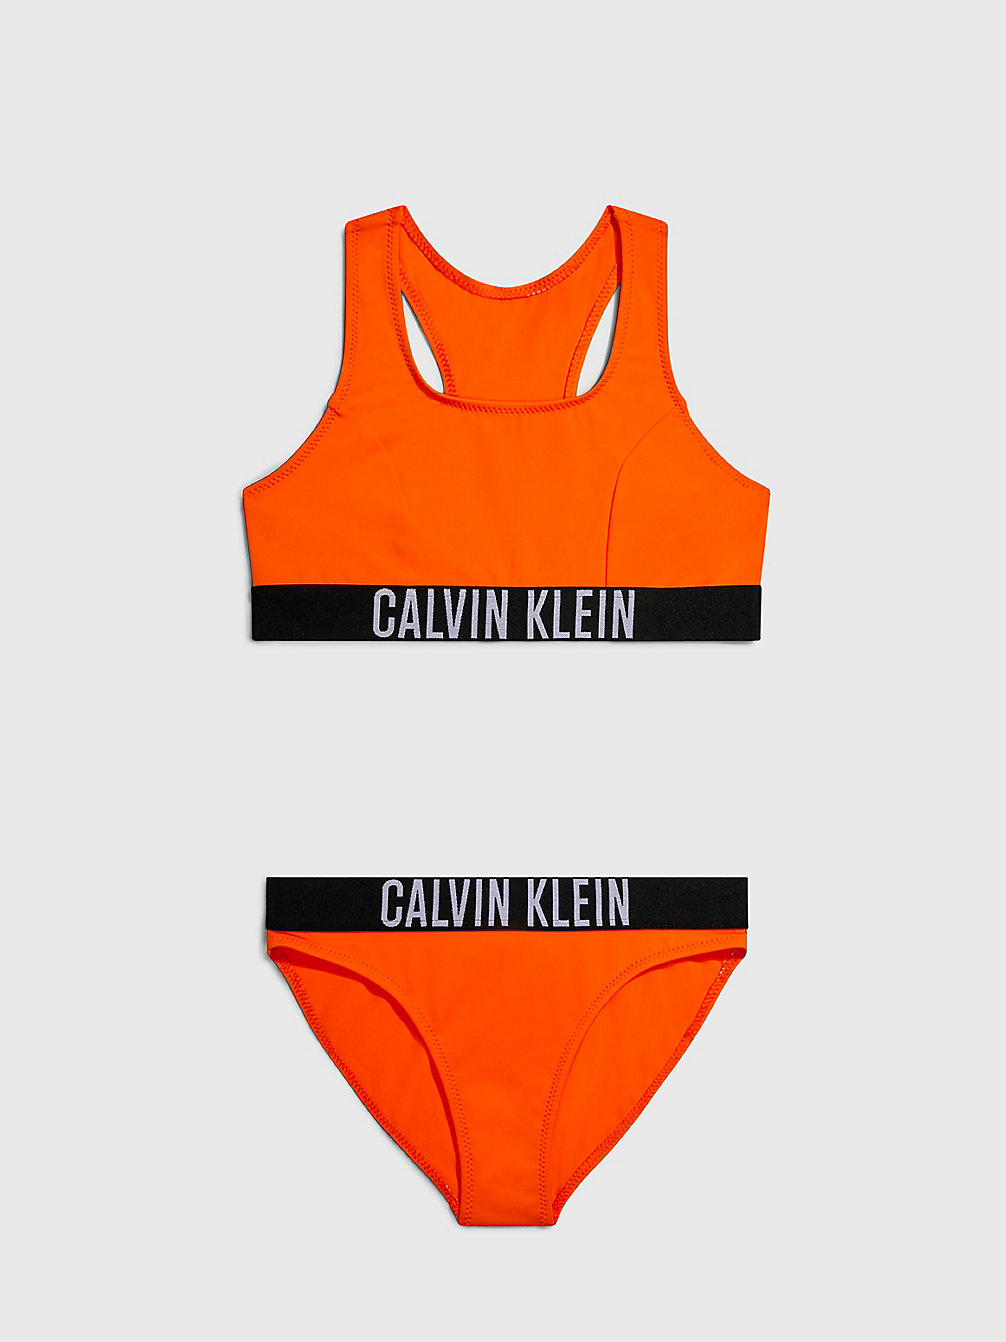 VIVID ORANGE Ensemble Bikini Brassière Pour Fille - Intense Power undefined girls Calvin Klein